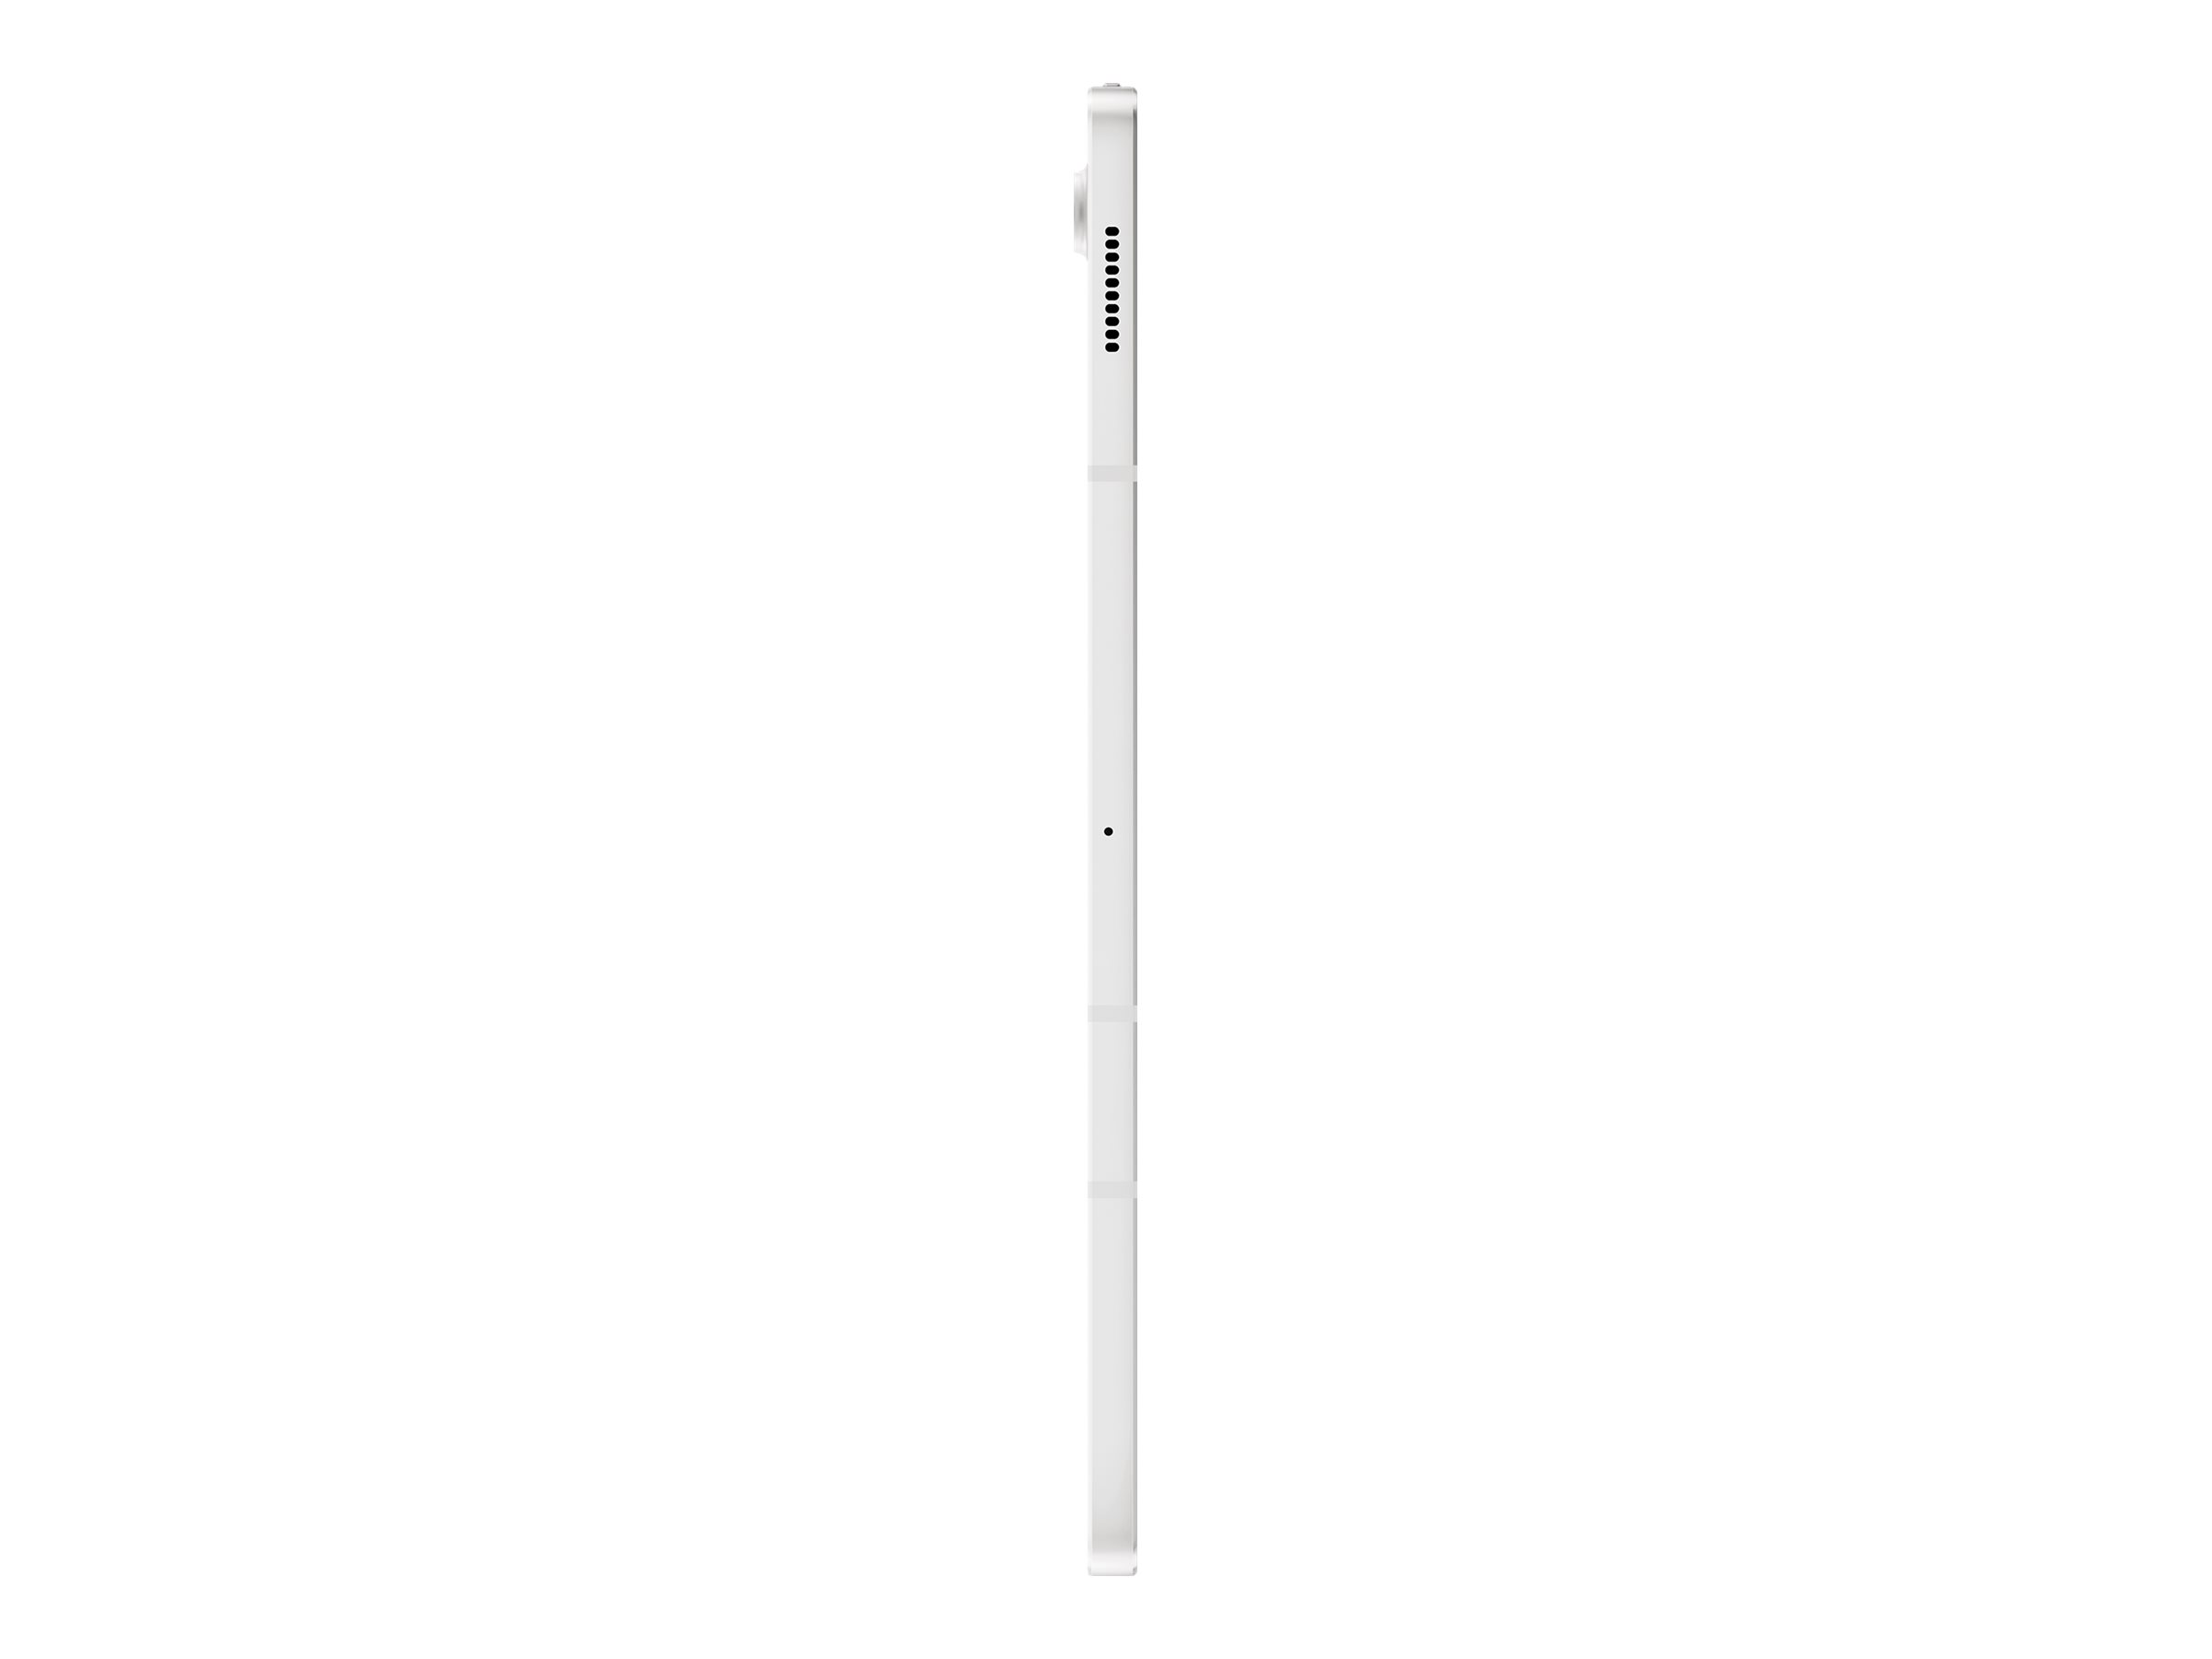 Samsung Galaxy Tab S7 FE - Tablet - Android - 64 GB - 31.5 cm (12.4") TFT (2560 x 1600) - microSD-Steckplatz